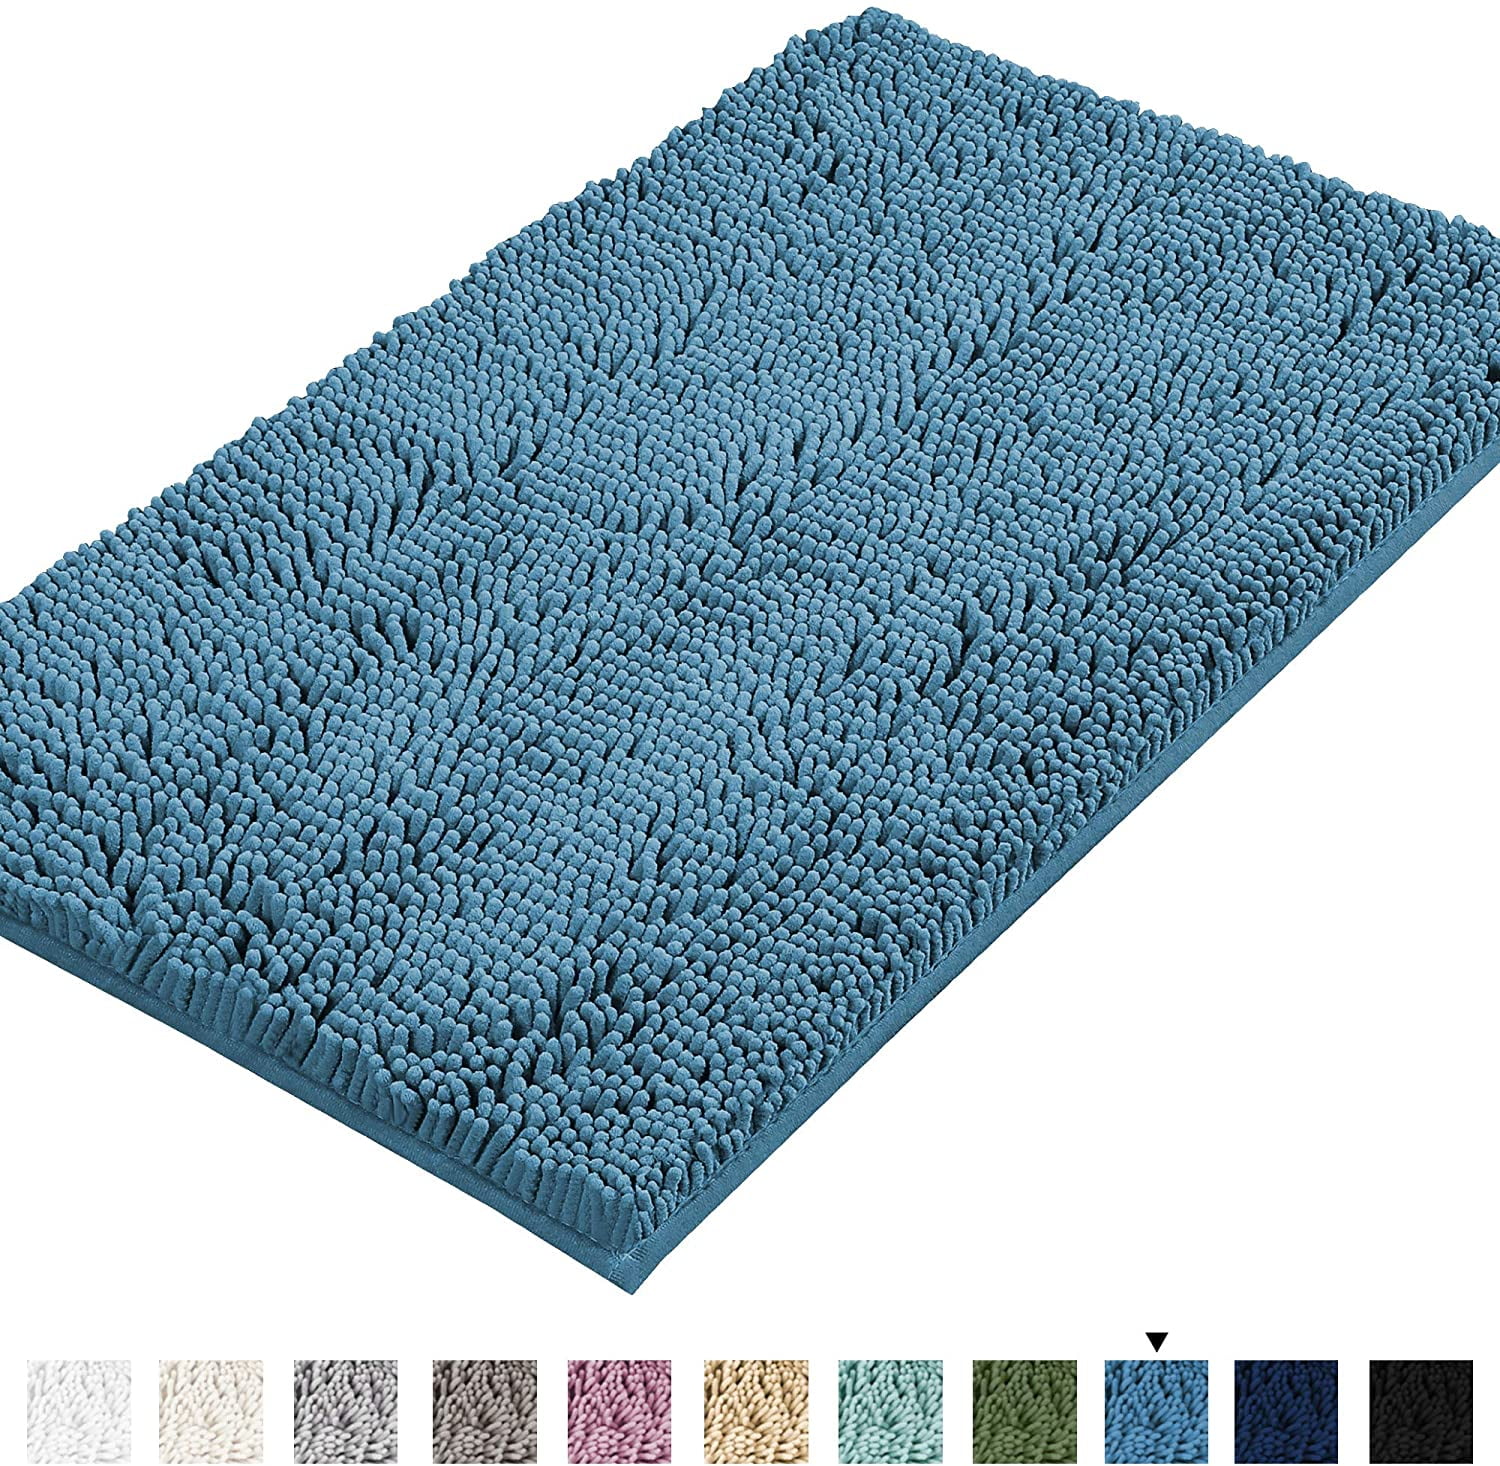 Loden Rugs for Bathroom Slip-Resistant Shag Chenille Bath Rugs Mat Extra Soft 